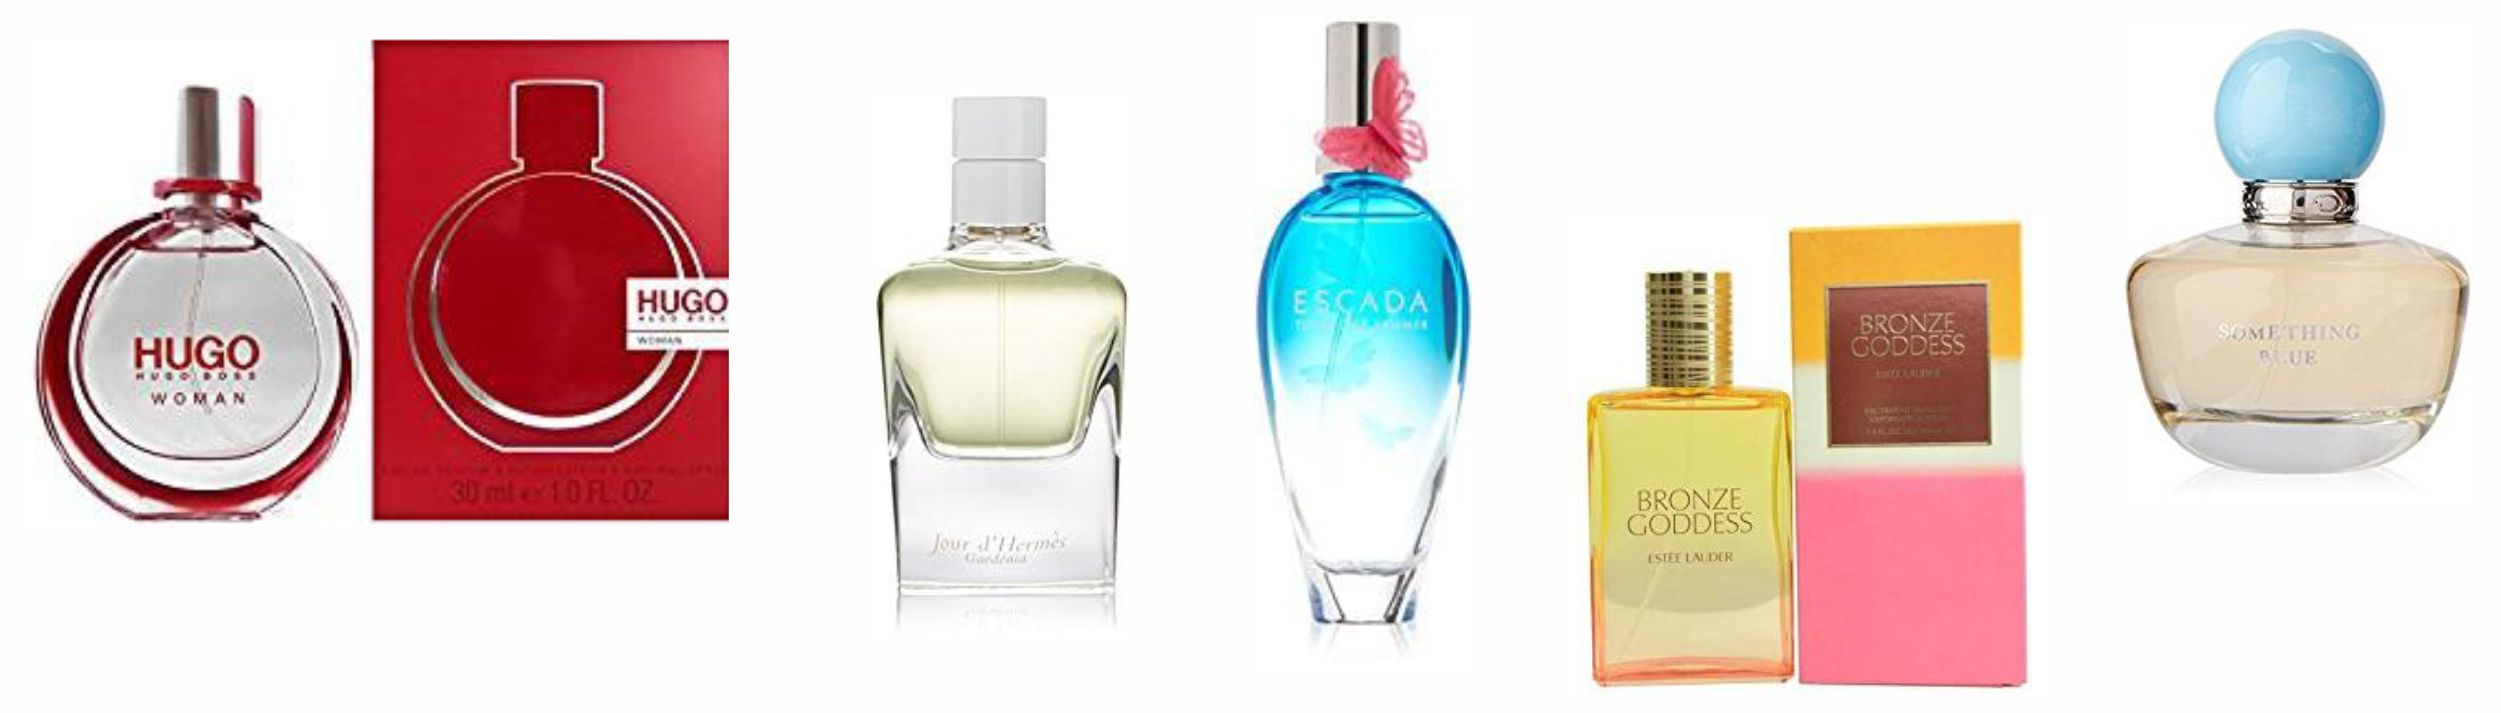 Реформуляция парфюмерных ароматов